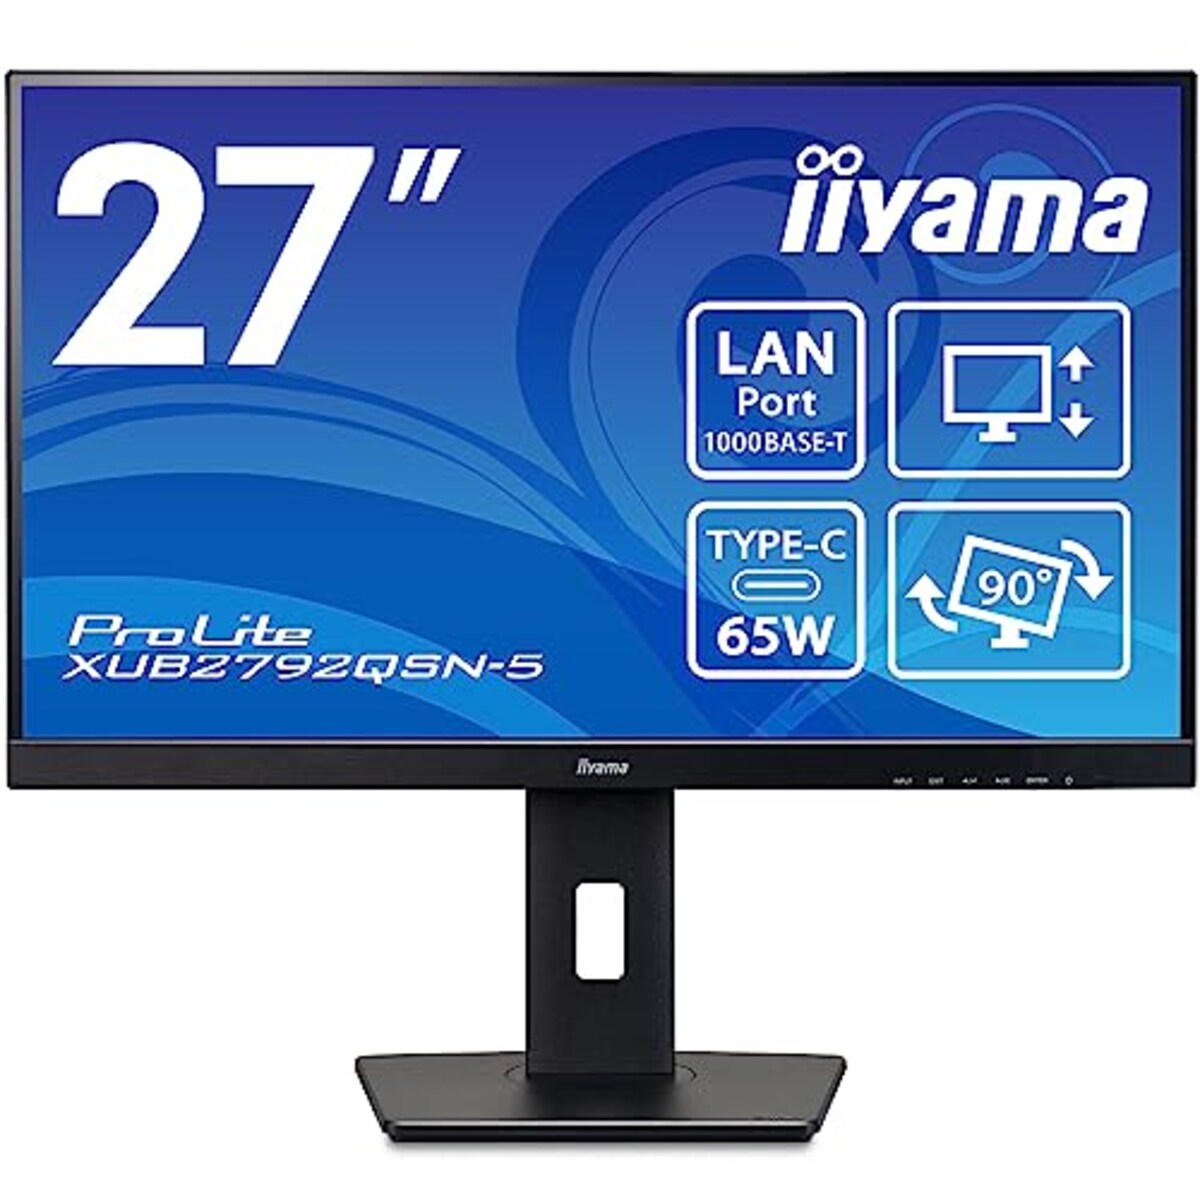 iiyama モニター ディスプレイ 27インチ WQHD USB Type-C IPS方式 高さ調整 角度調整 縦回転 HDMI DisplayPort LANポート 3年保証 国内サポート XUB2792QSN-B5